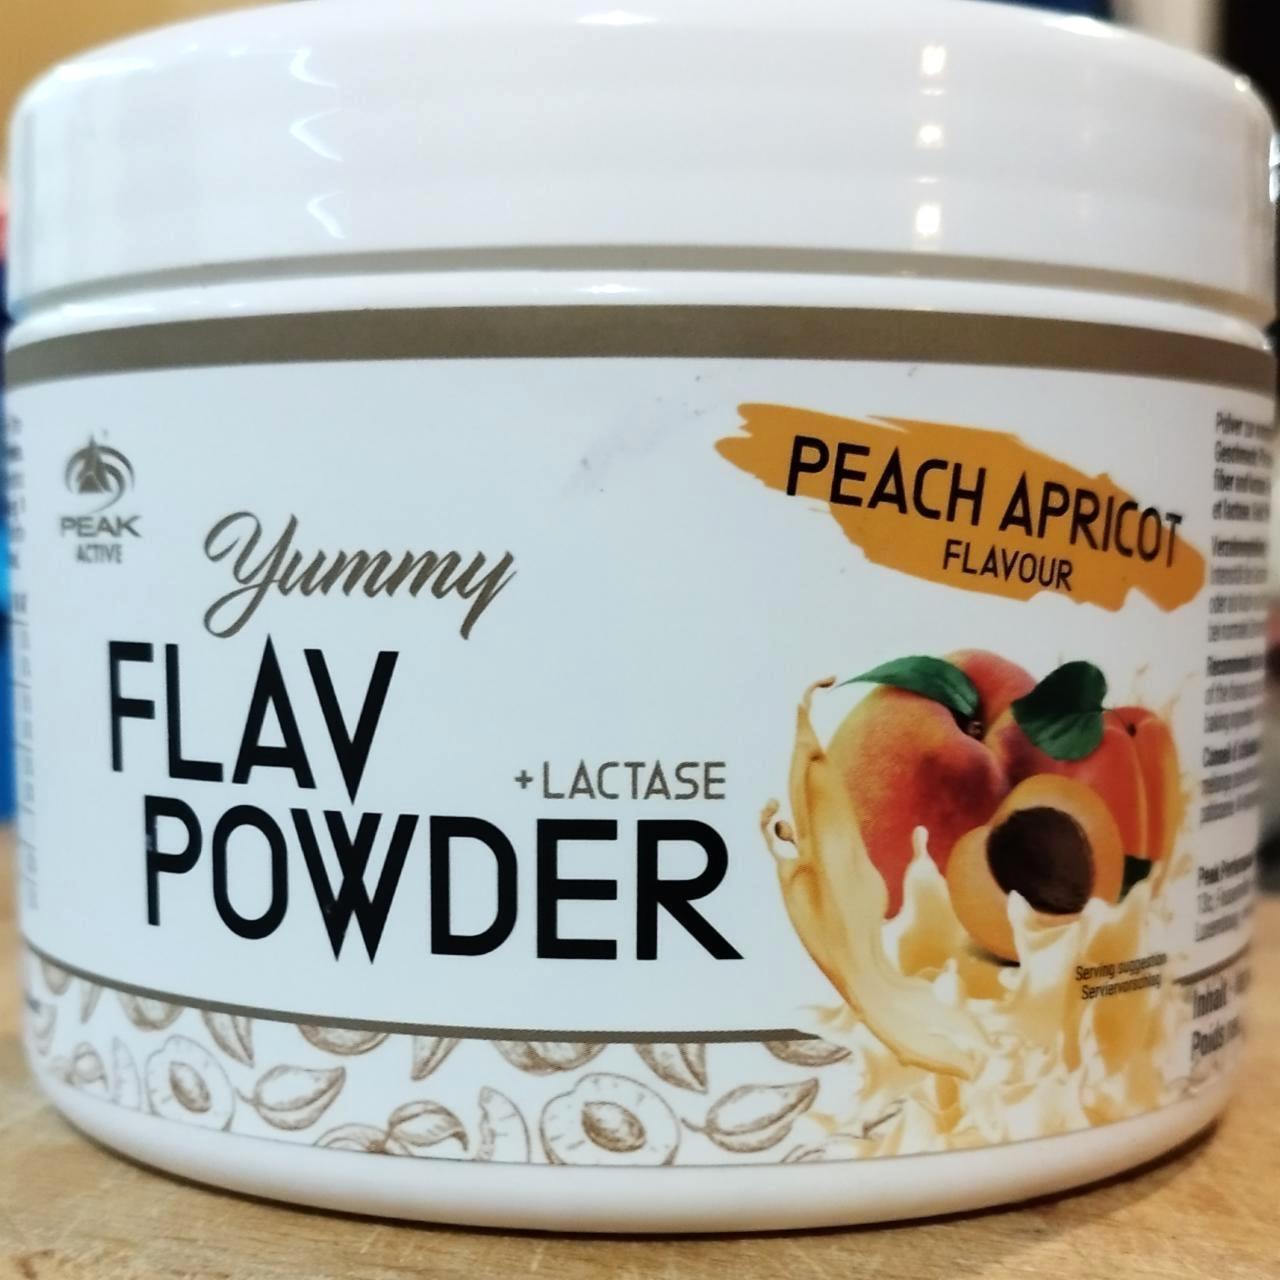 Képek - Yummy flav powder peach apricot Peak Active